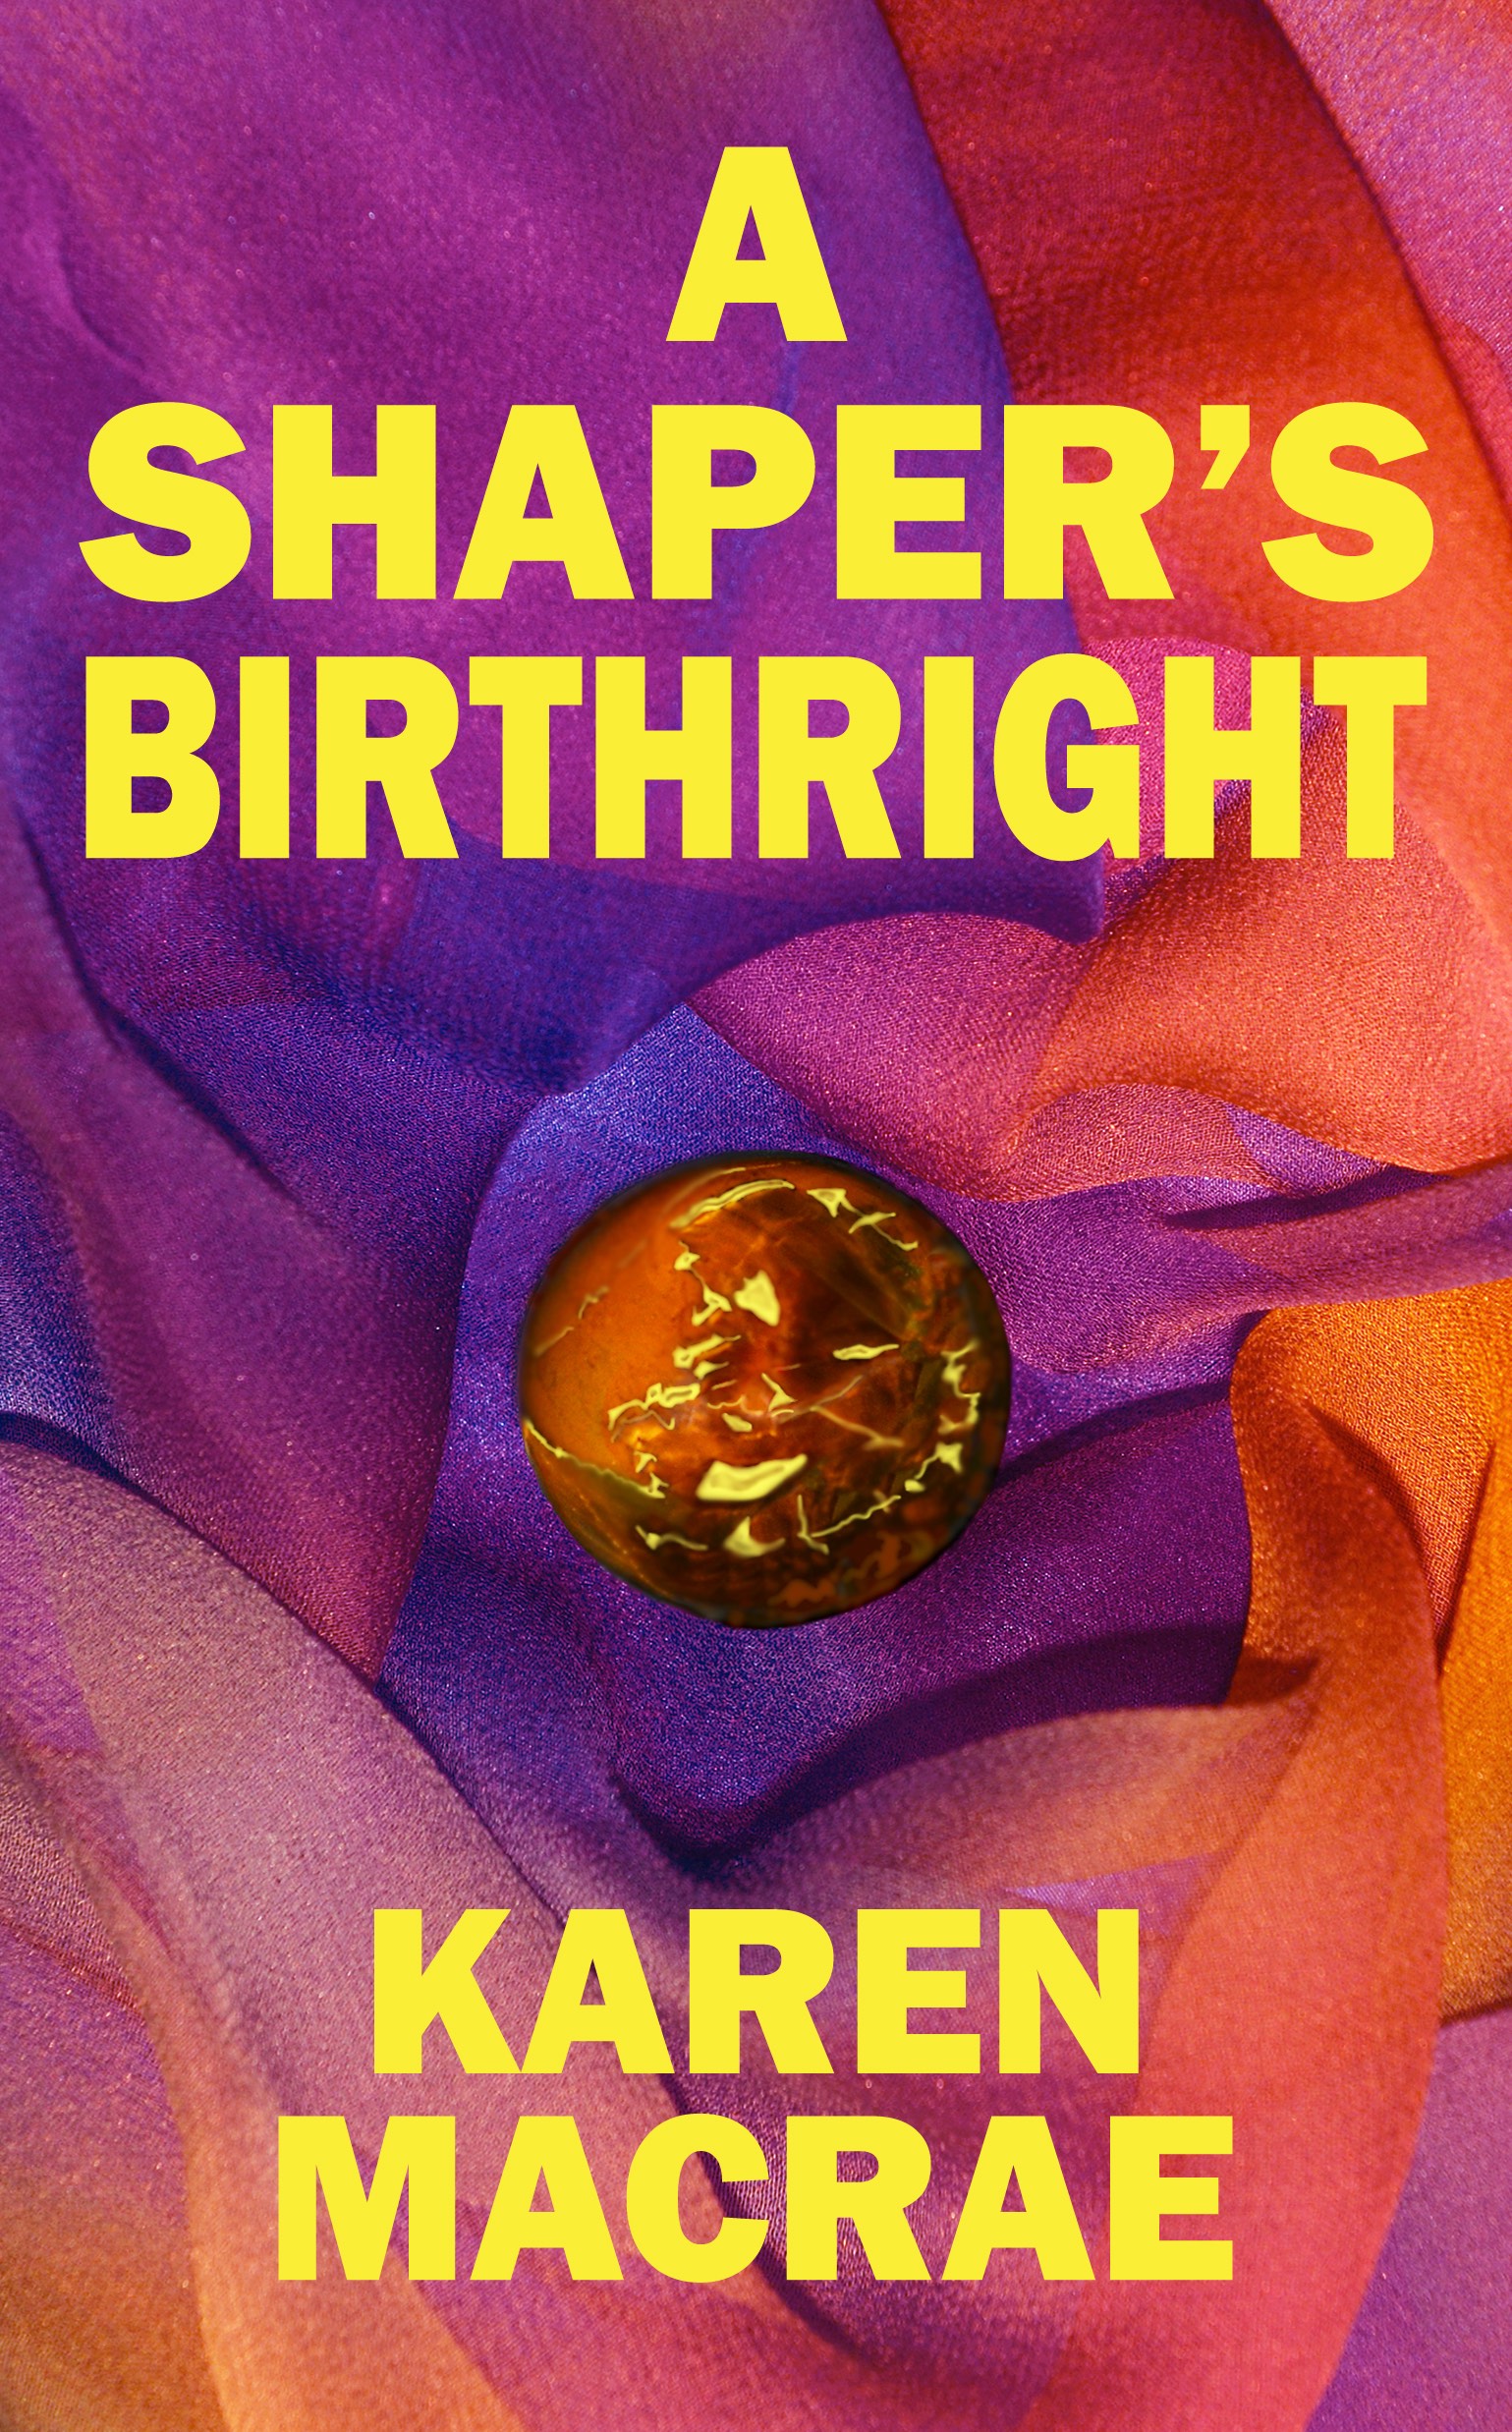 FREE: A Shaper’s Birthright by Karen MacRae